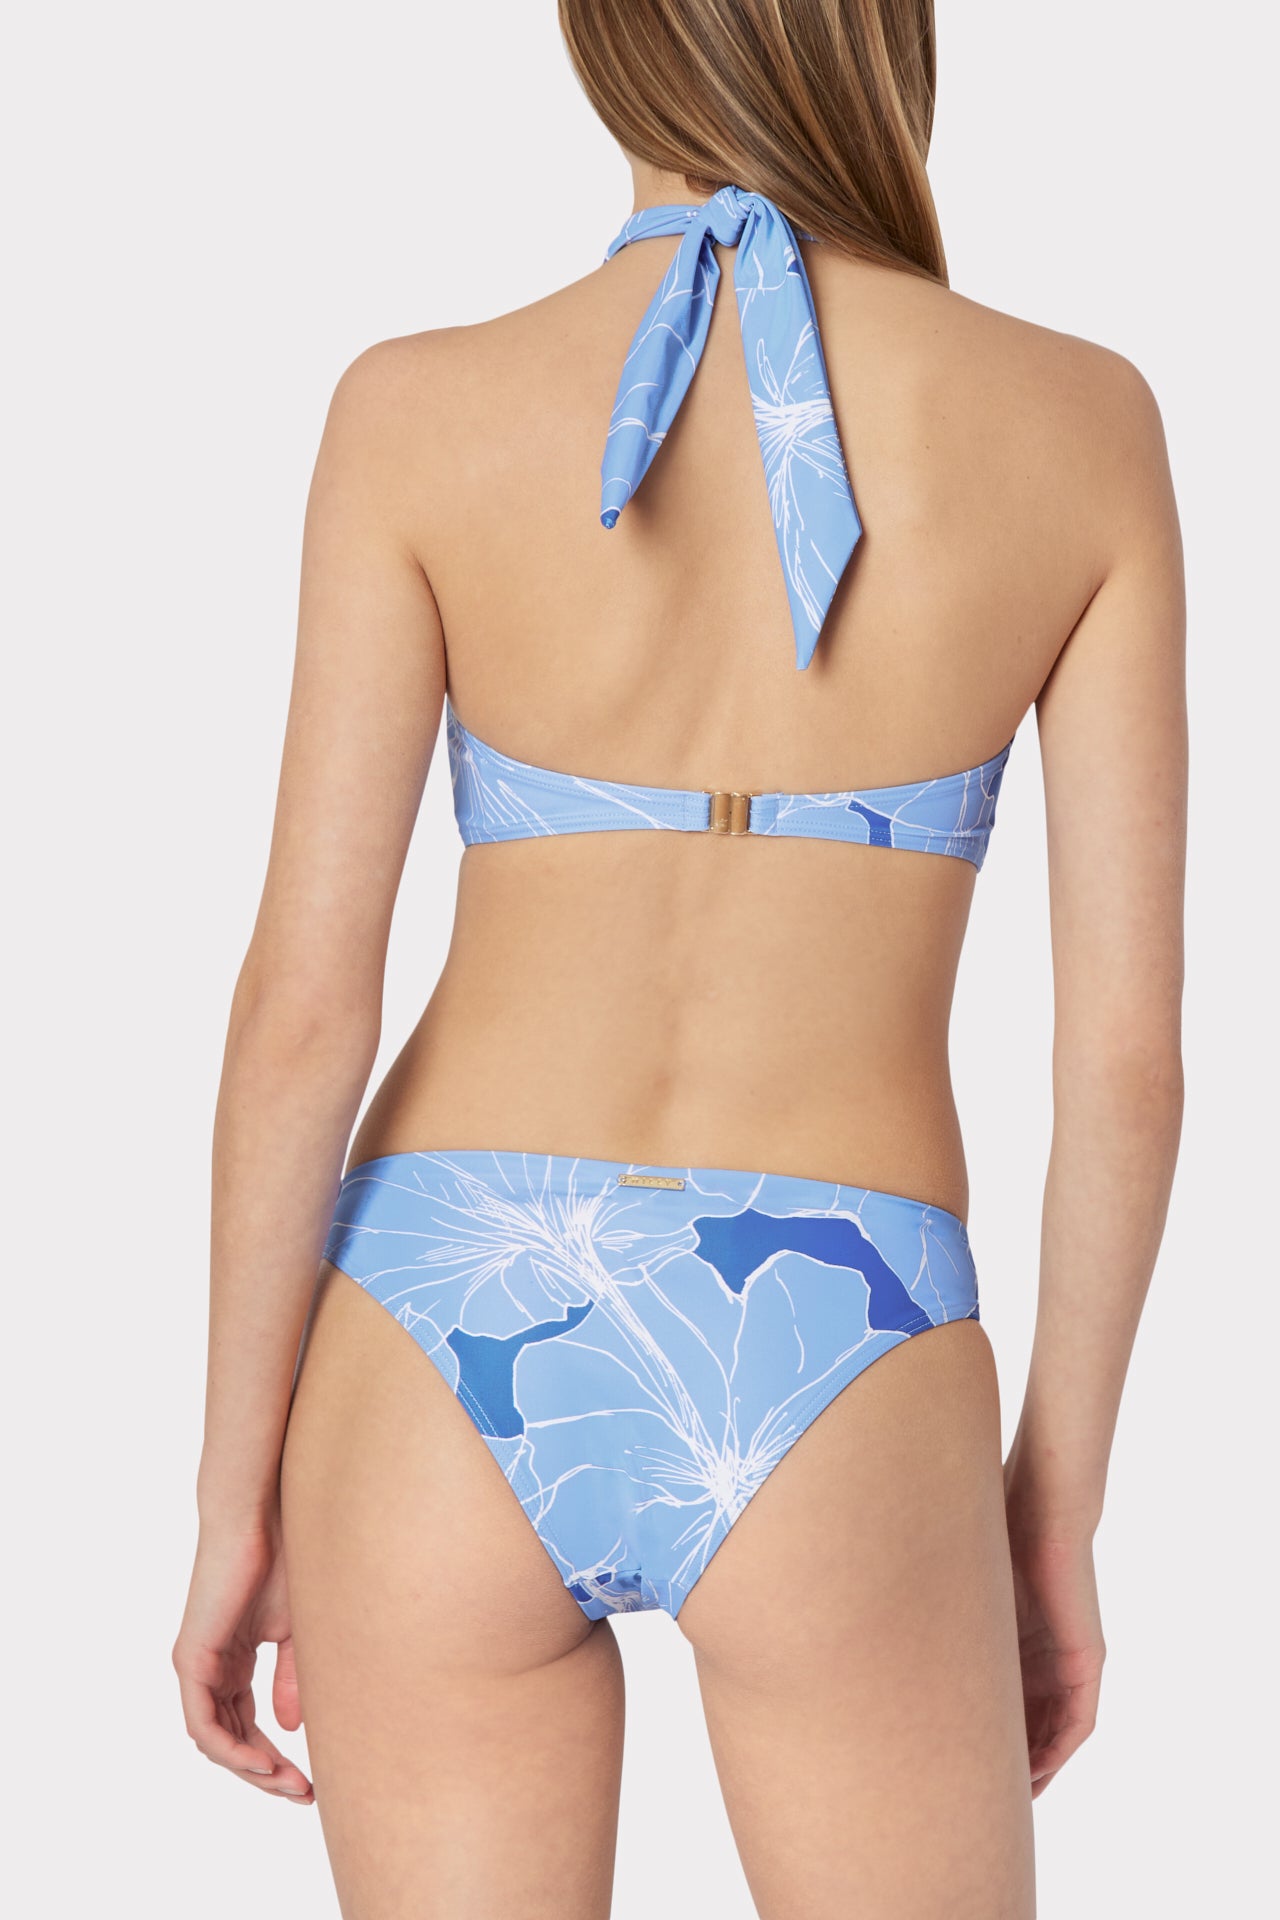 Waterlily Monique Bikini Bottom